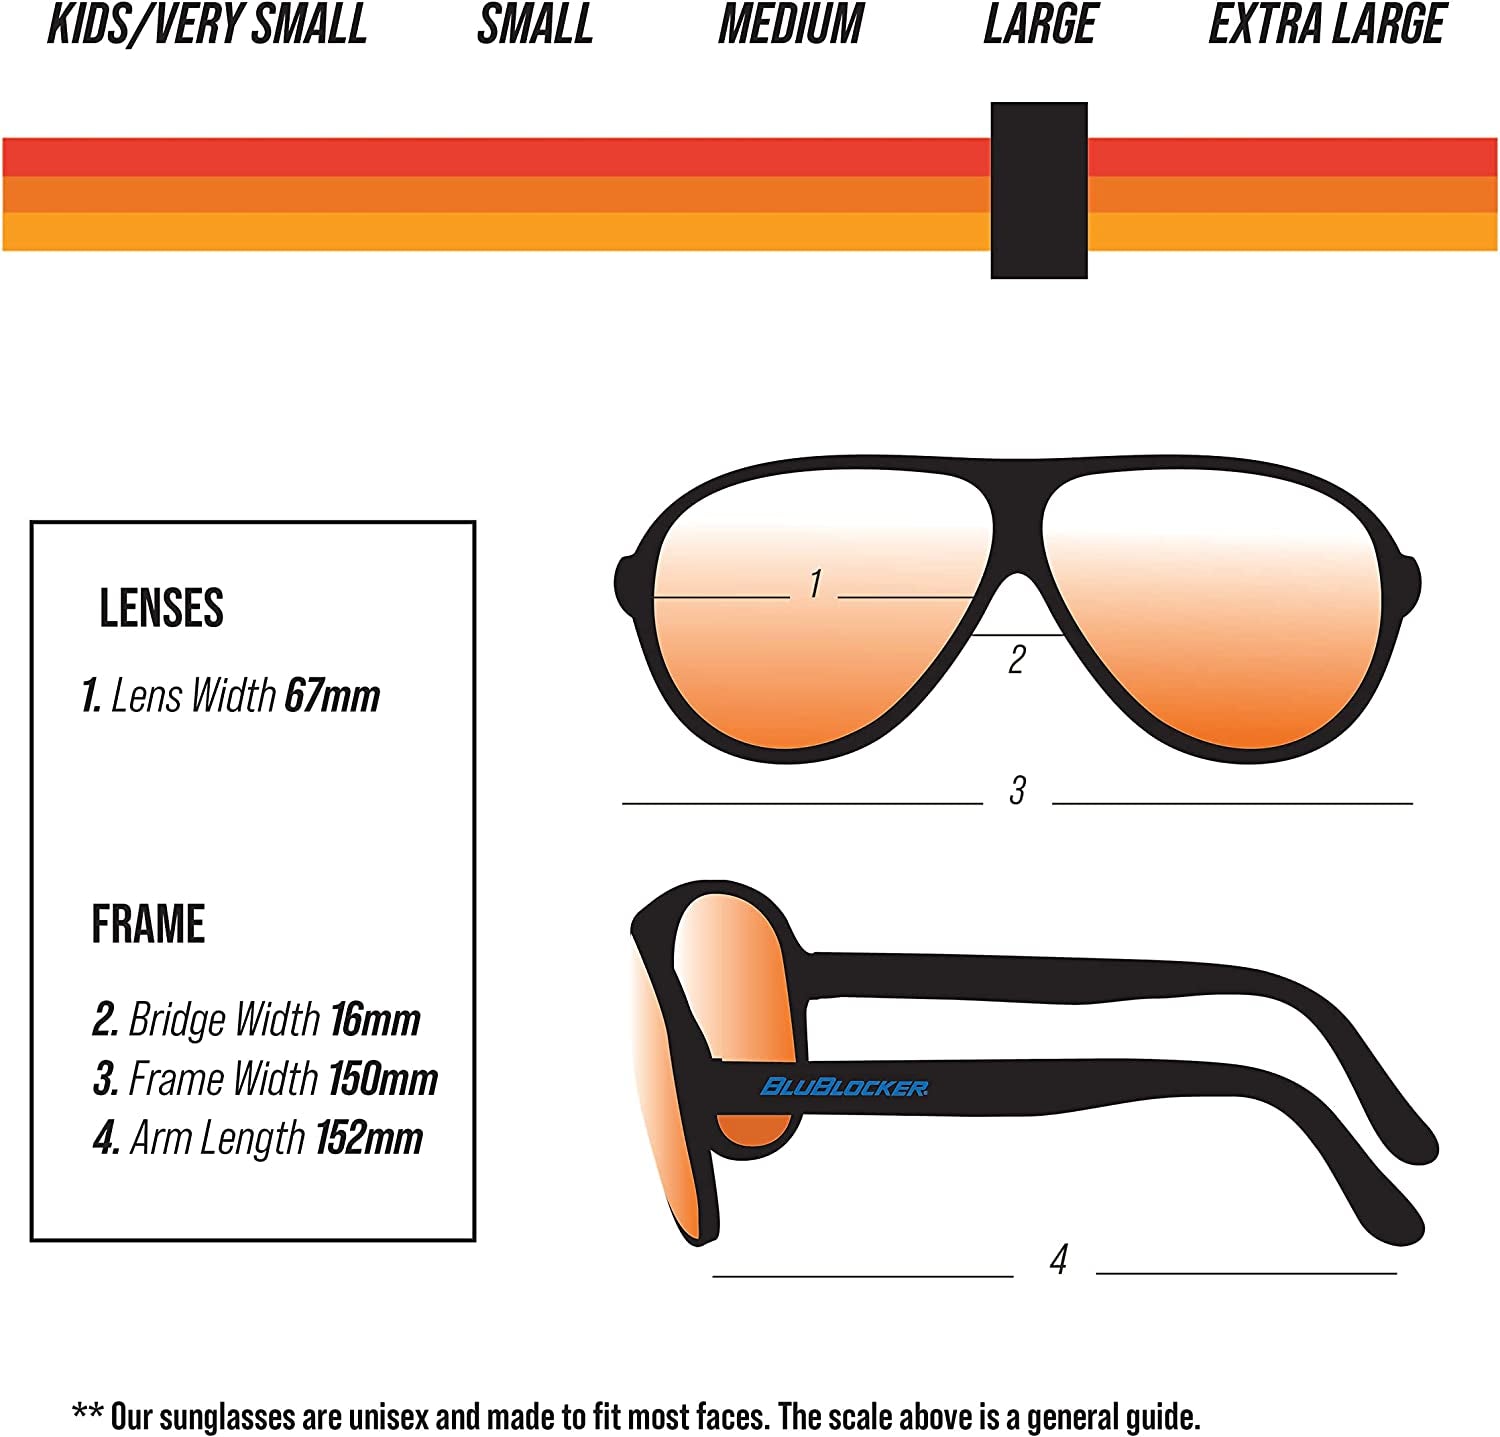 , Demi-Tortoise Original Aviator Sunglasses with Polarized, Scratch Resistant Lens | Blocks 100% of Blue Light and UVA & UVB Rays | Retro | for Men, Women & Everyone | 0408K |